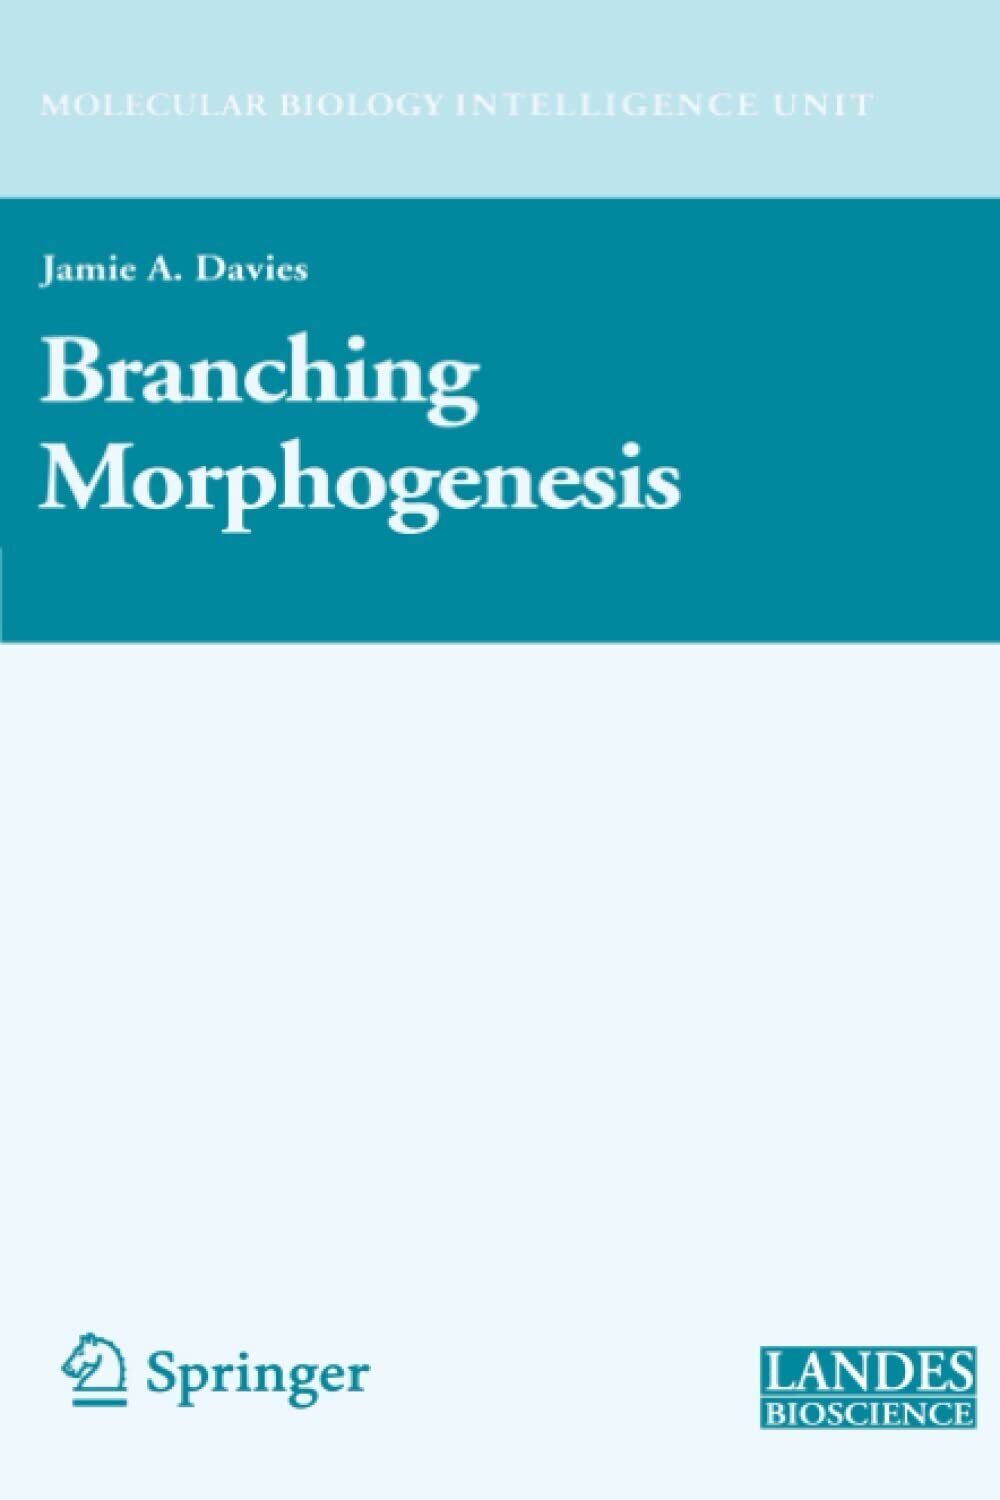 Branching Morphogenesis - Jamie Davies - Springer, 2010 libro usato